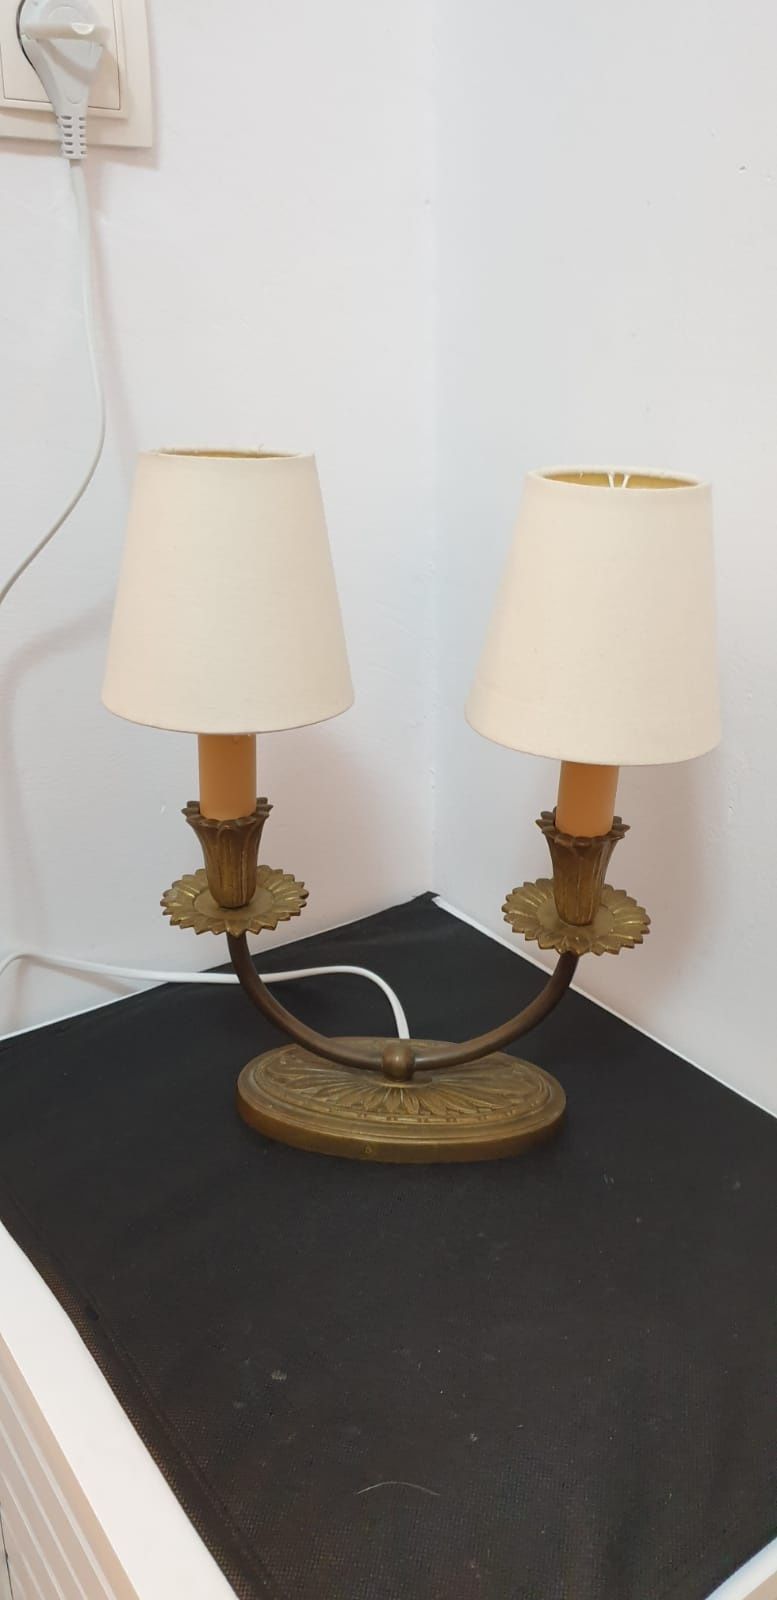 Lampa veioza vintage colectie bronz masiv Belgia 1950